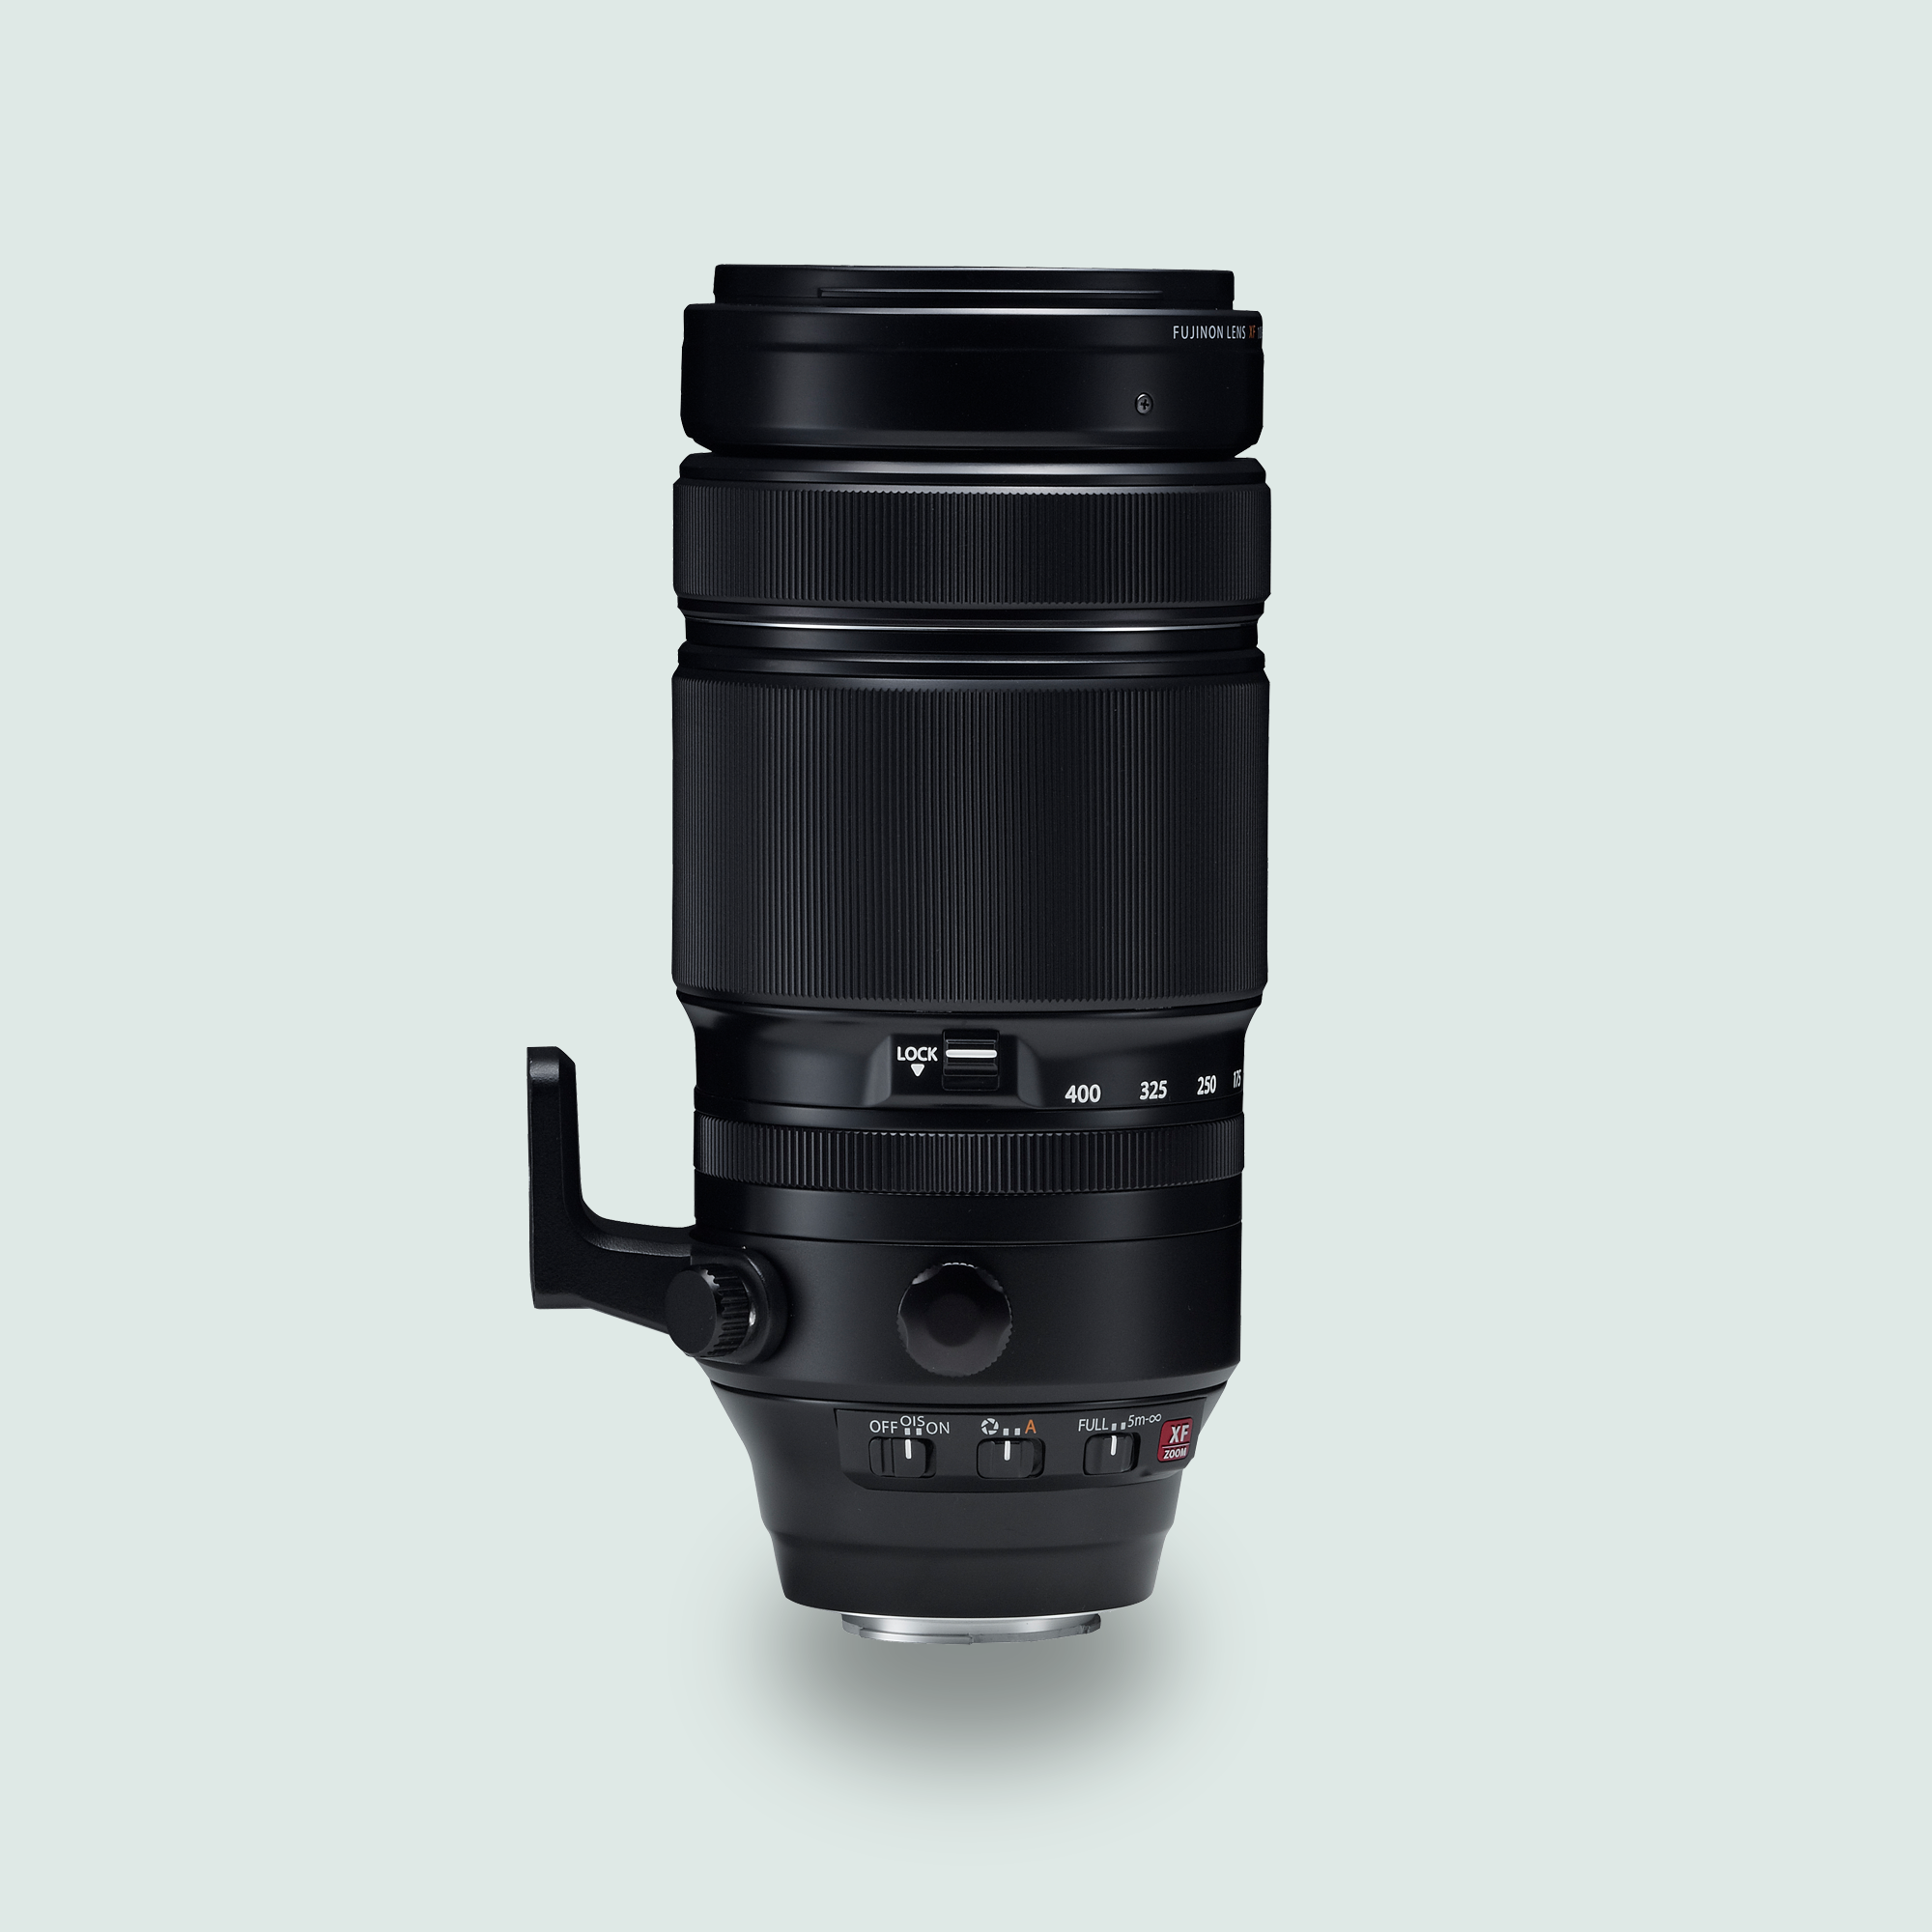 XF 50-140mm F2.8 R LM OIS WR Lens | Fujifilm AU House of Photography